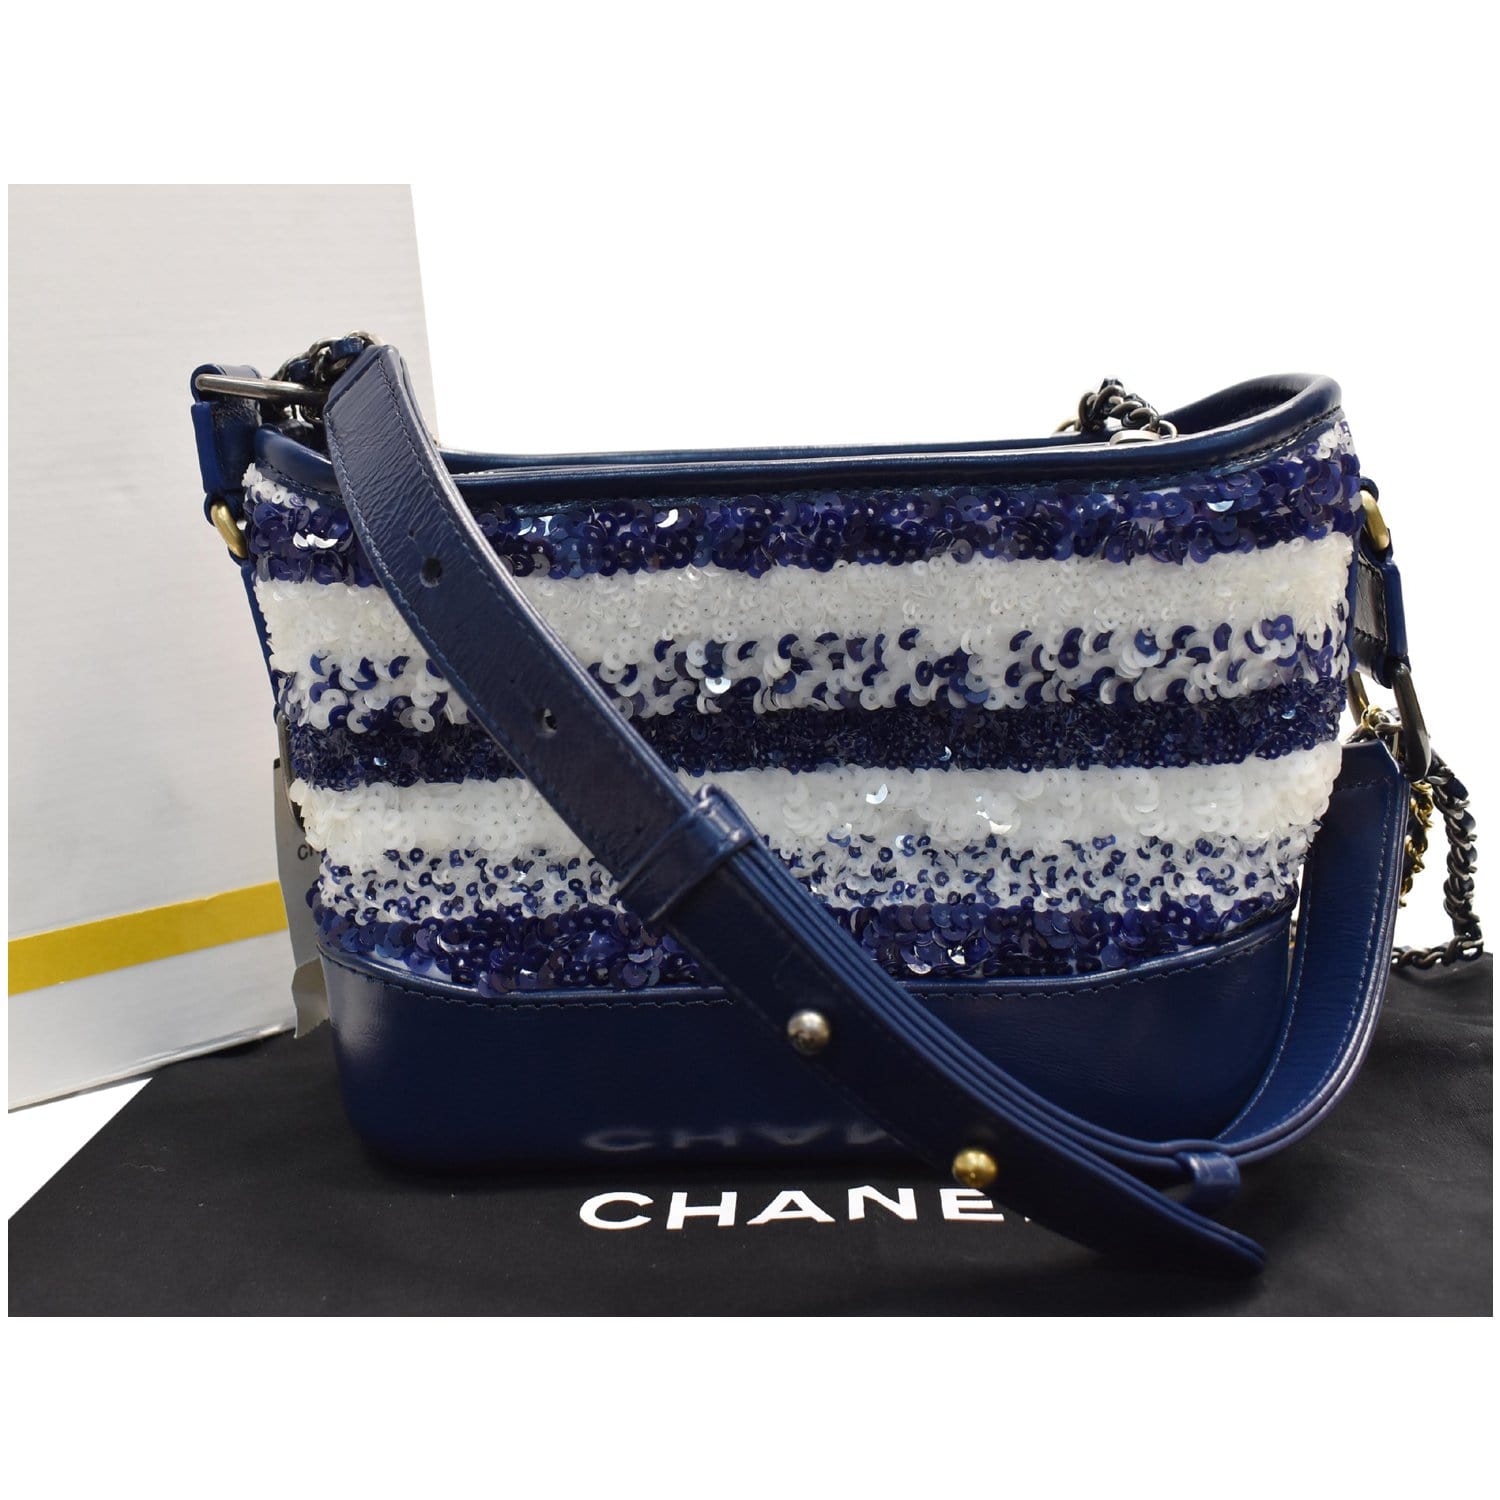 chanel's gabrielle small hobo bag